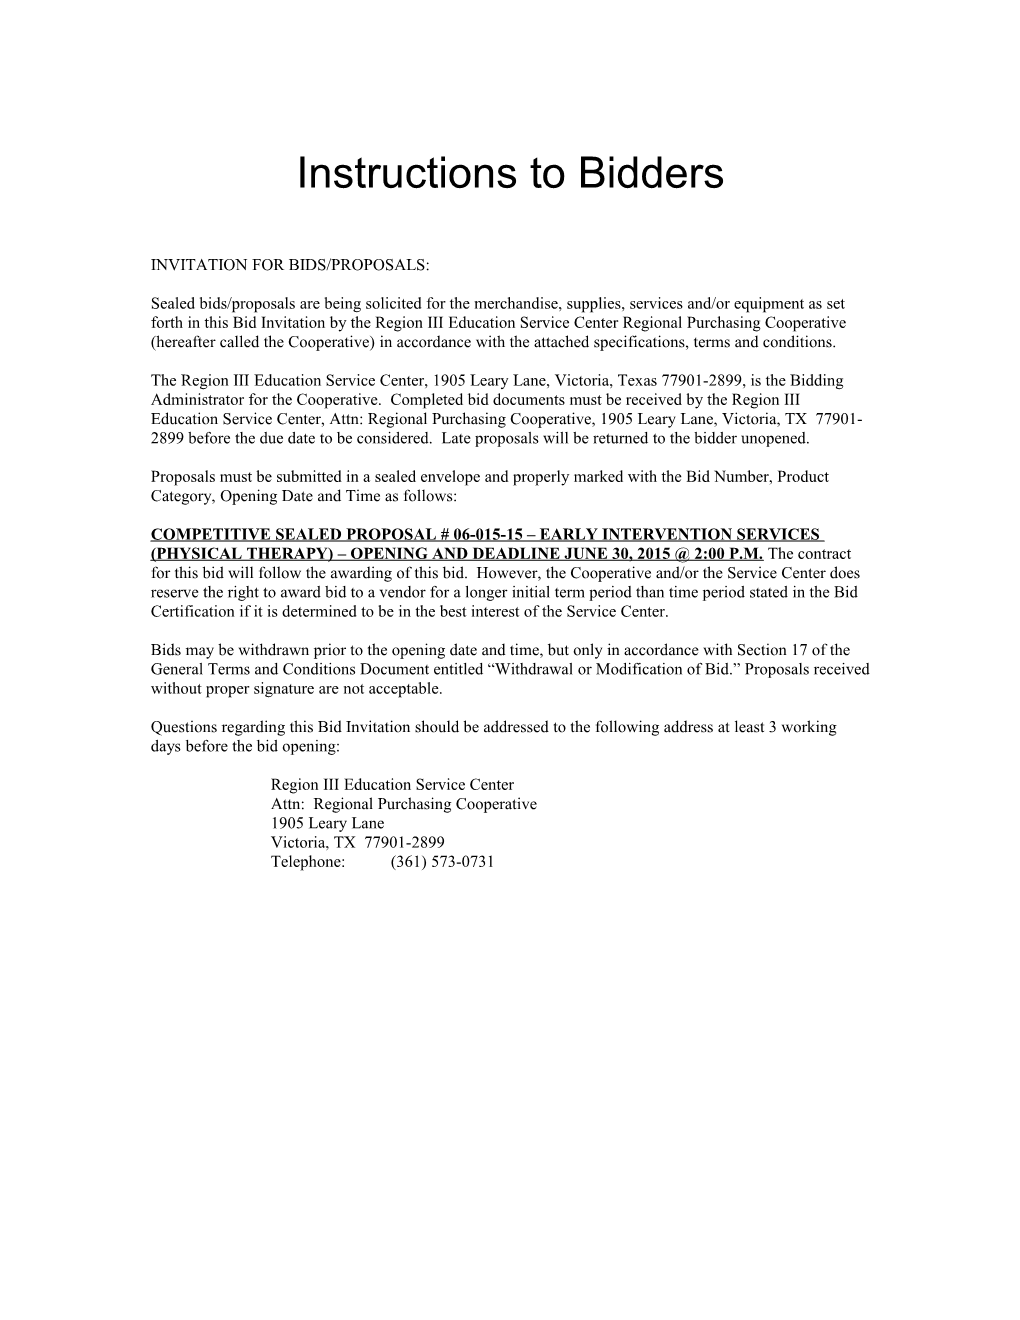 Invitation for Bids/Proposals